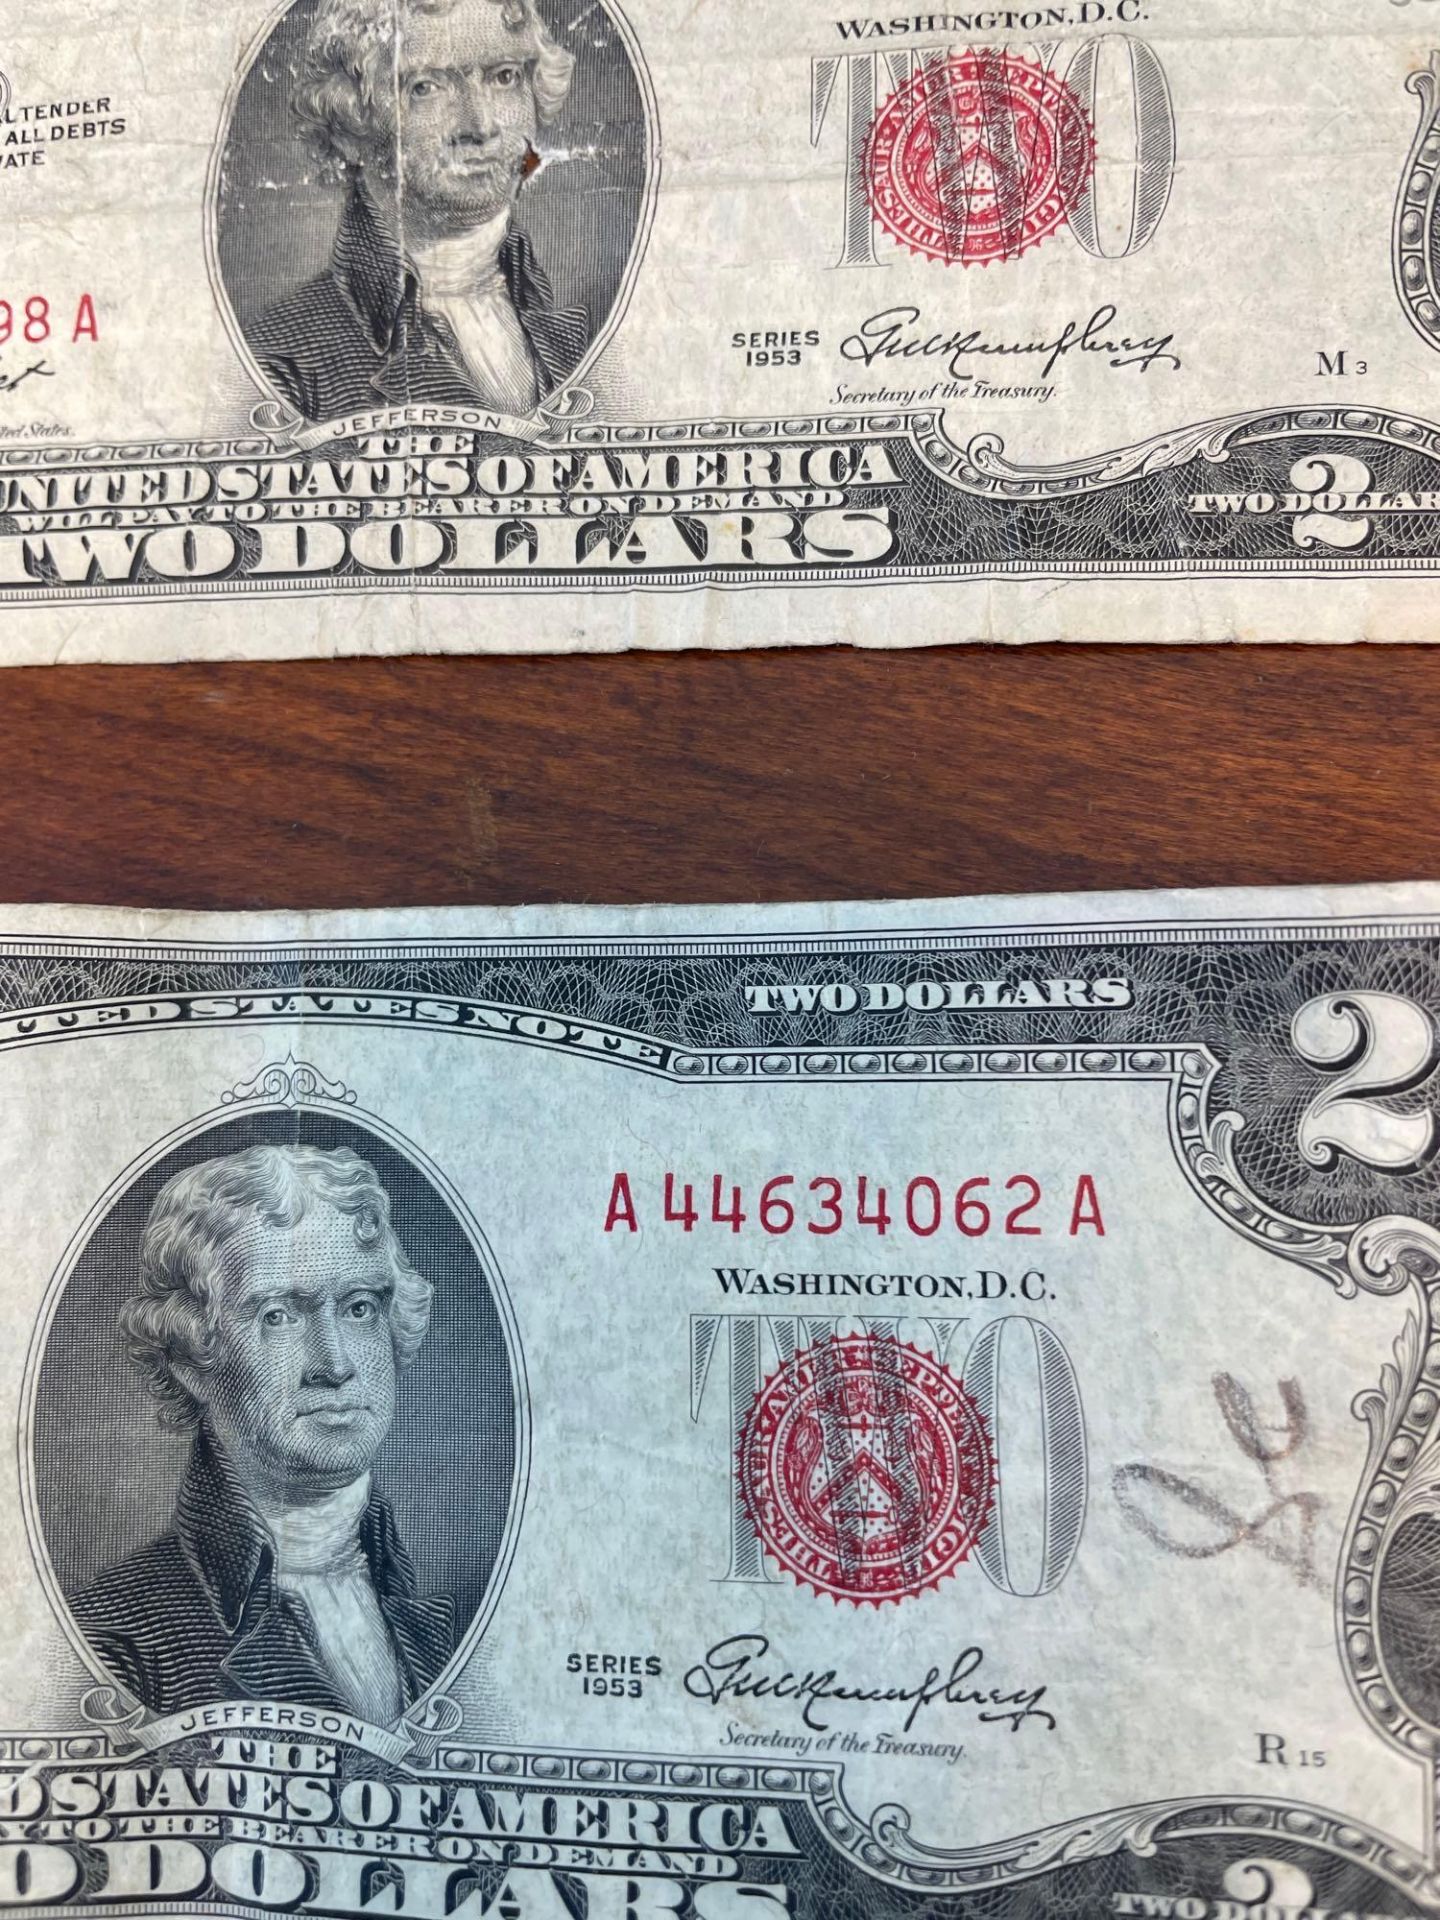 2 1953 Red Seal 2 Dollar Bills - Image 2 of 3